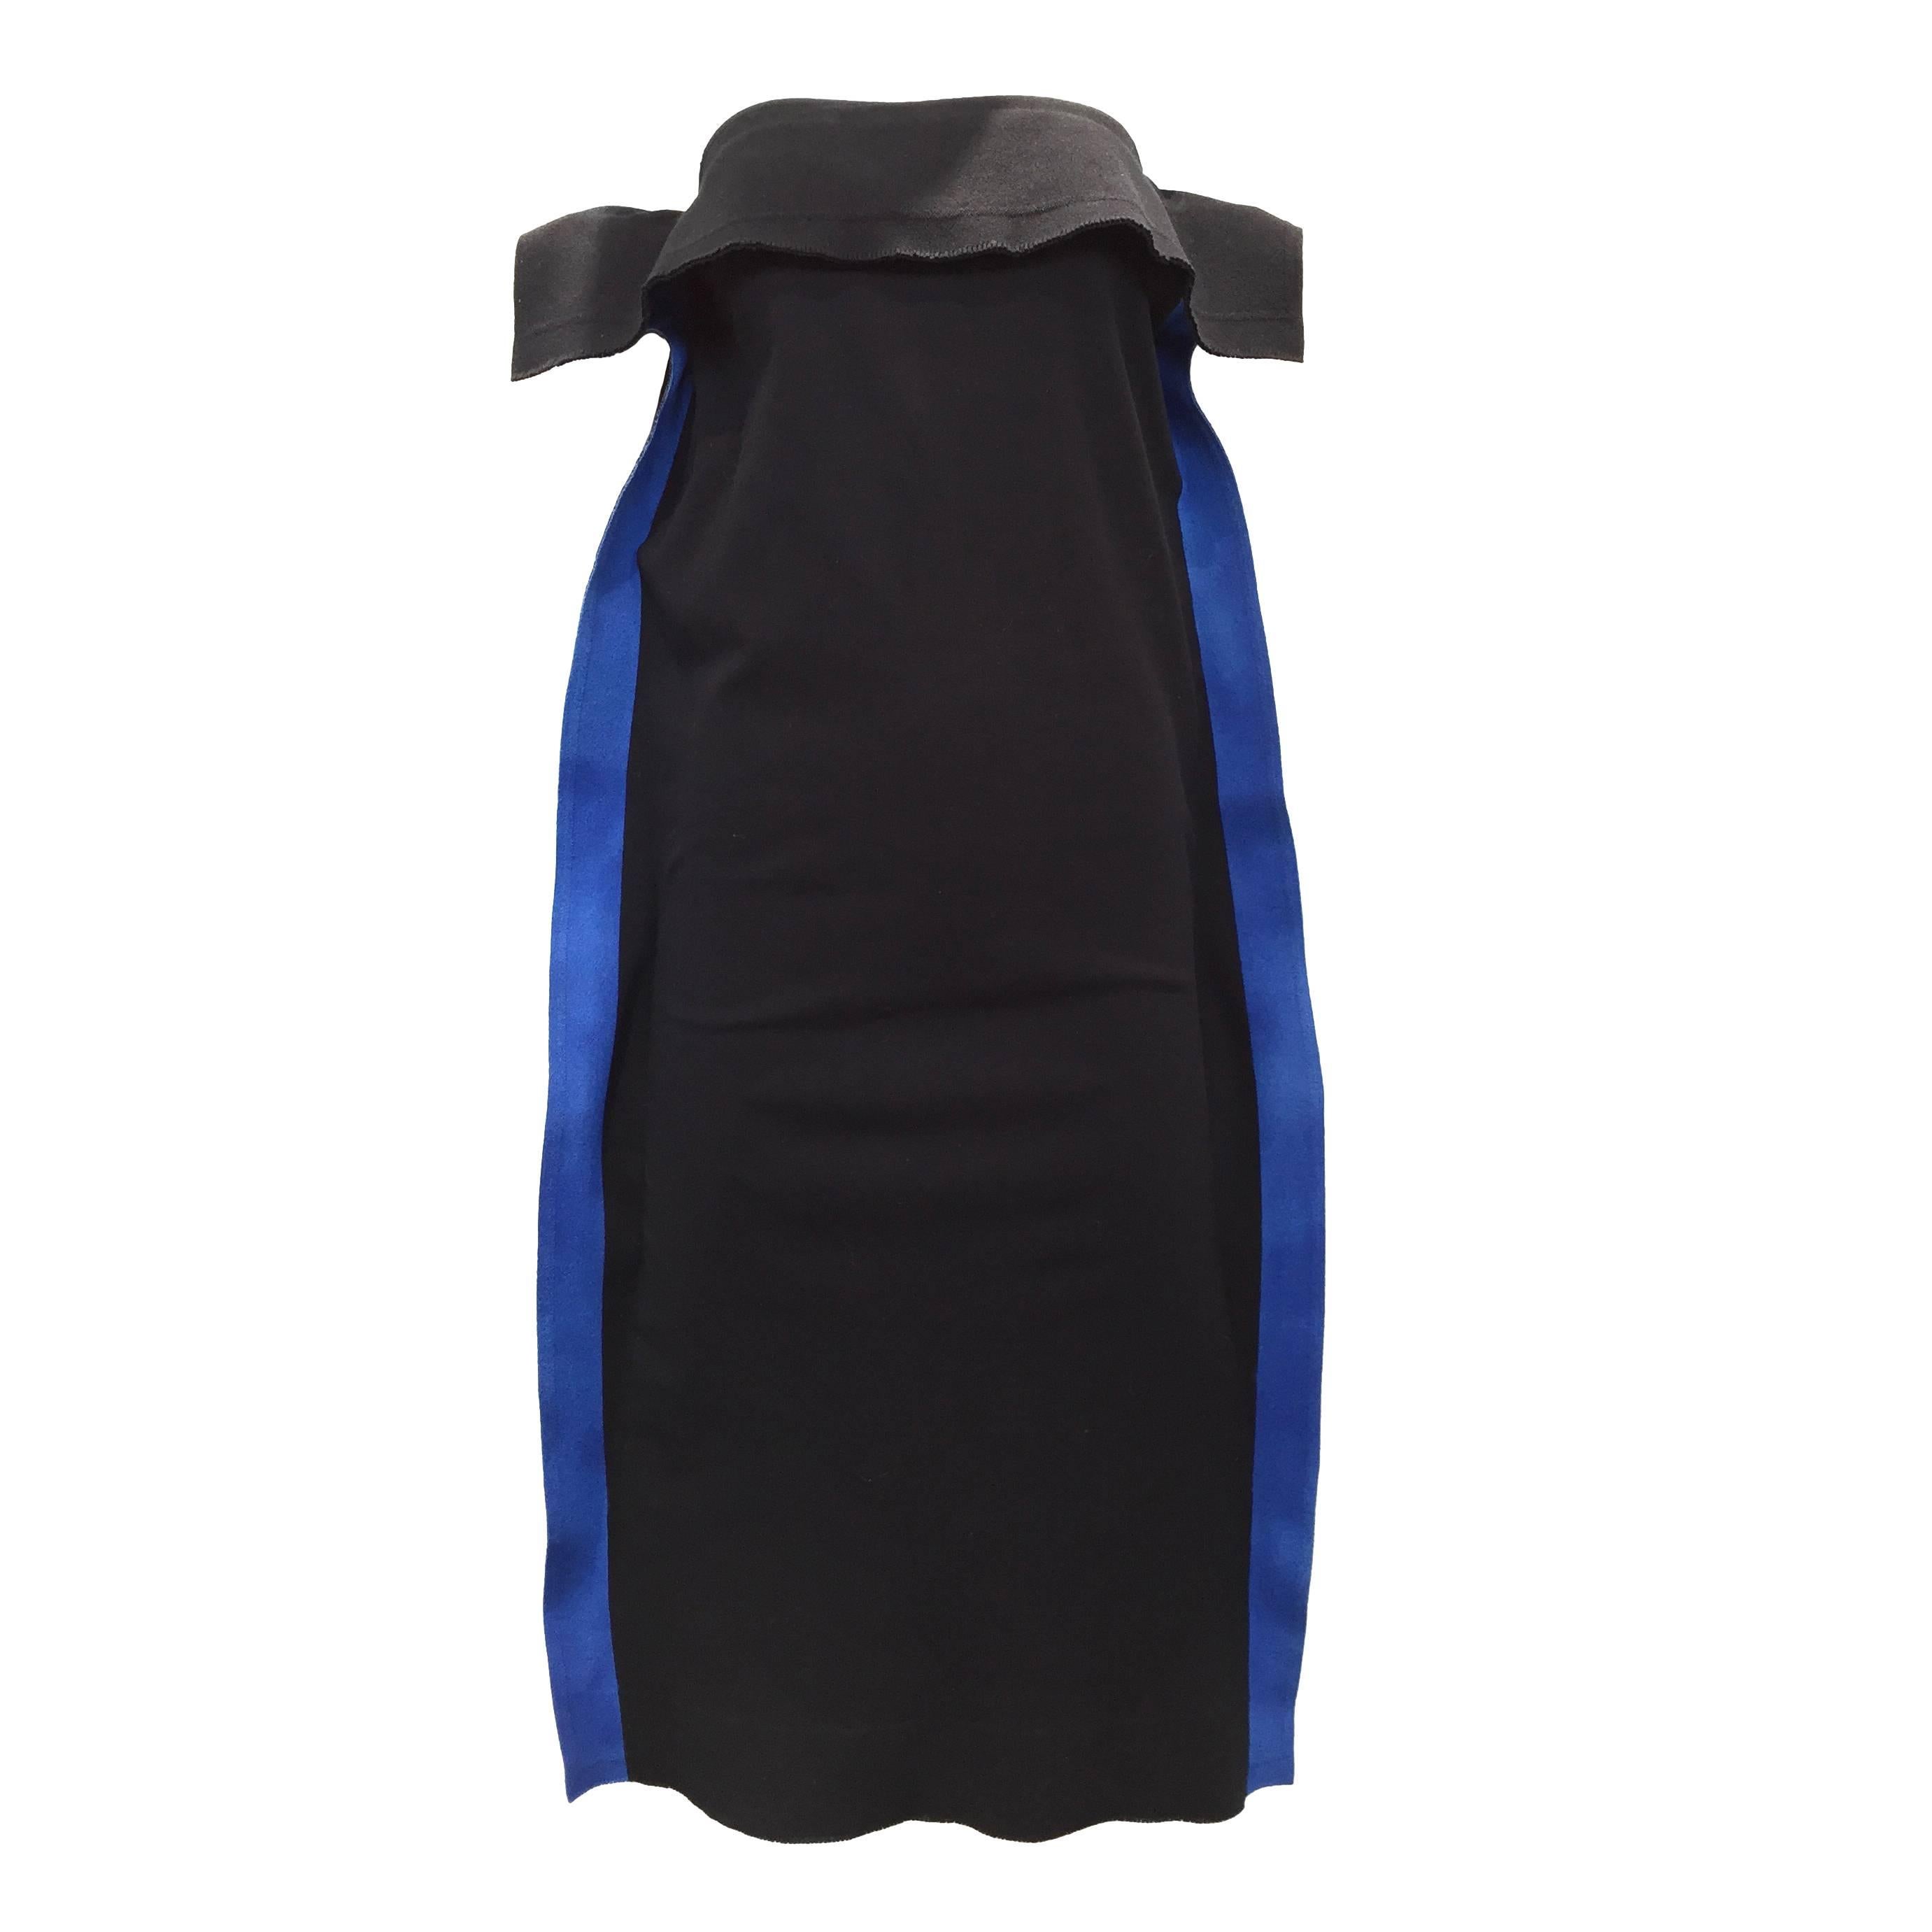 Rare Issey Miyake black and blue strapless  knit dress